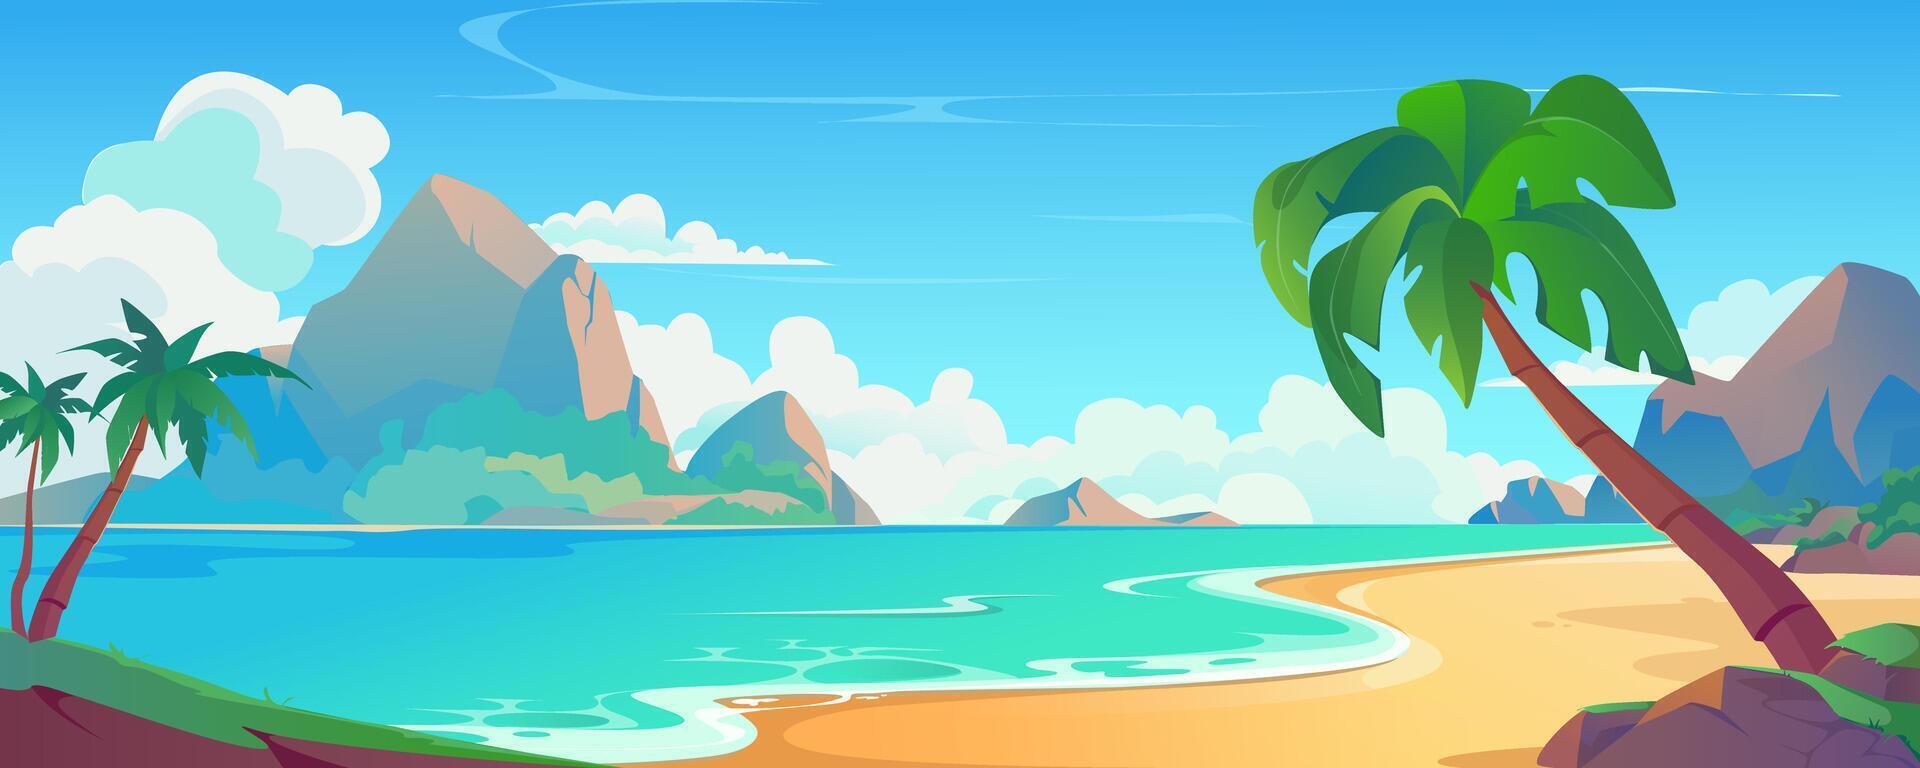 mar playa antecedentes bandera en dibujos animados diseño. tropical arena laguna paisaje con palma árboles, montaña rocas con día nubes, Oceano ondas. Hora de verano playa idílico vista. dibujos animados ilustración vector